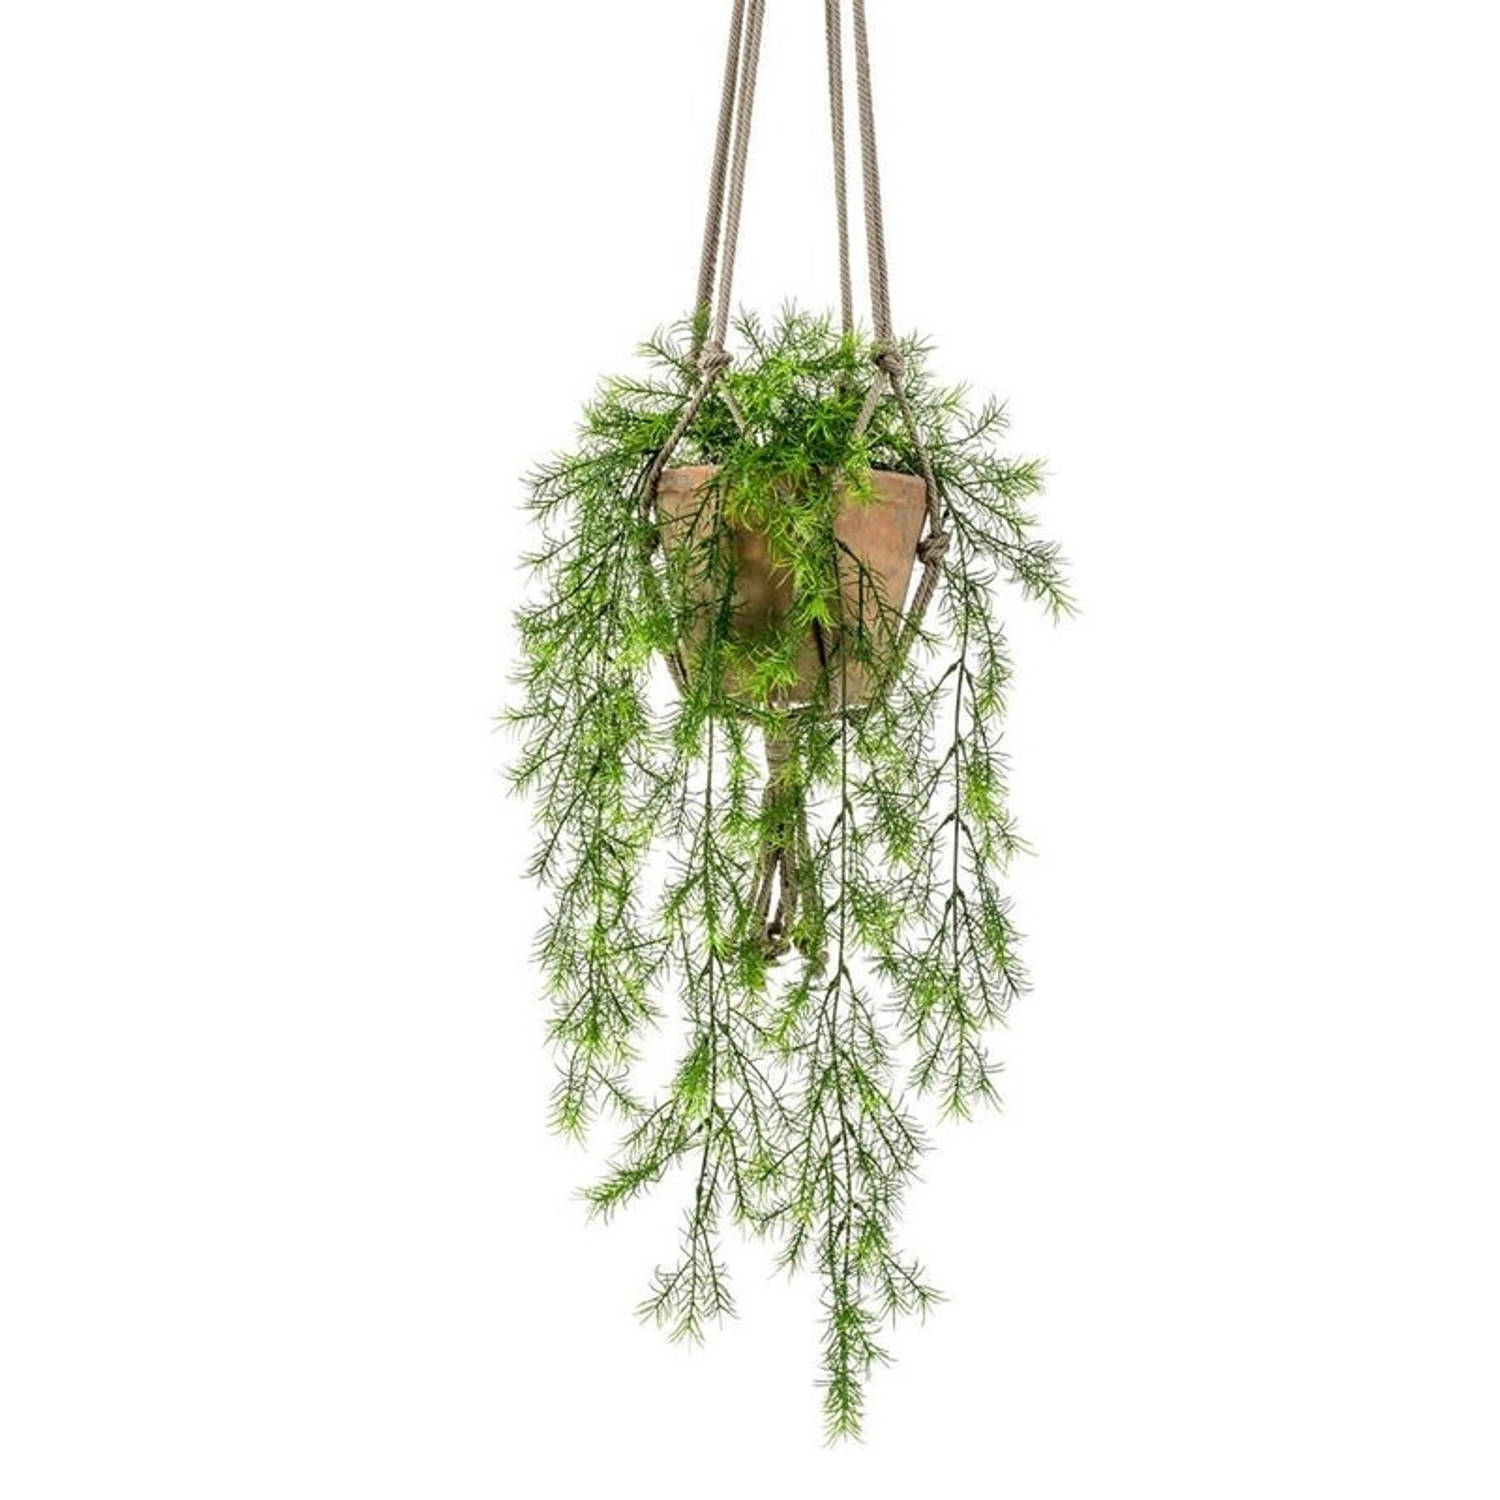 Wants&Needs Kunstplant Hangend Asparagus Sprengeri 75cm